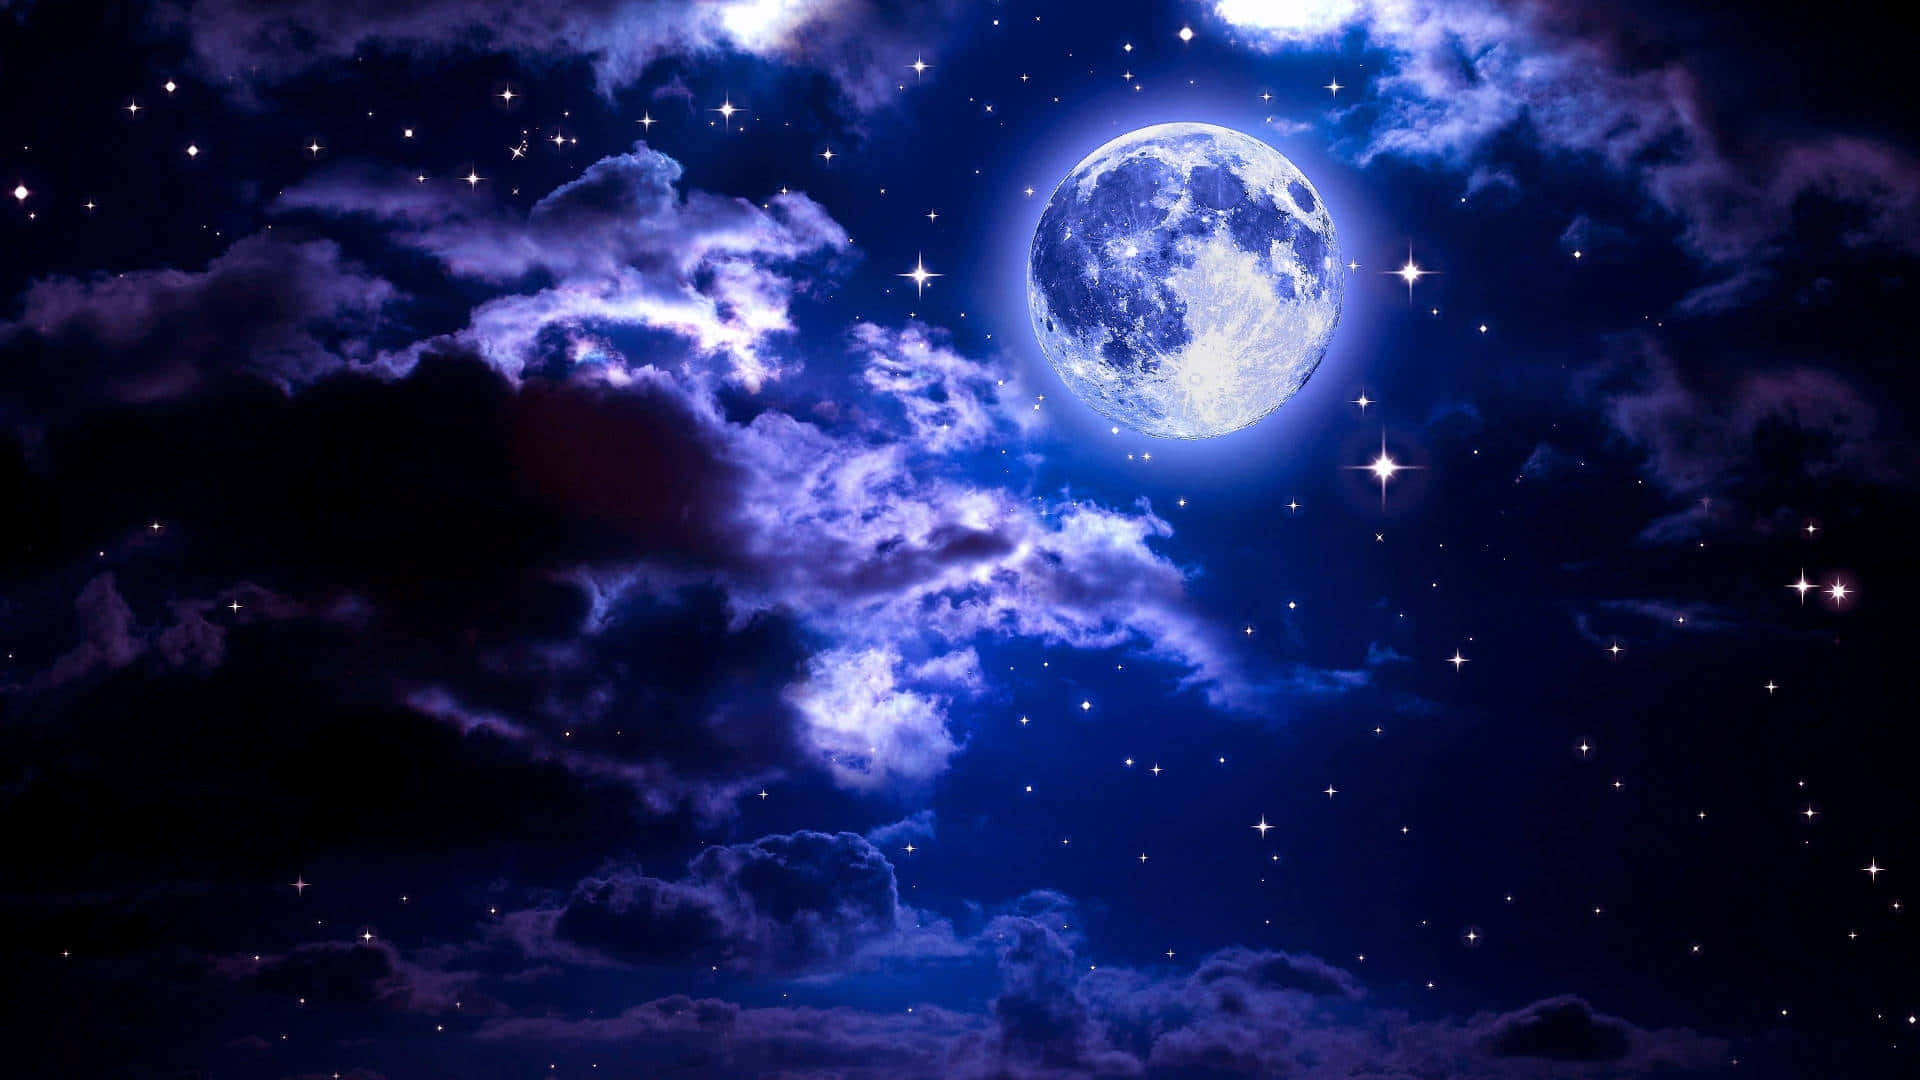 Ethereal Moonlit Night Sky Wallpaper